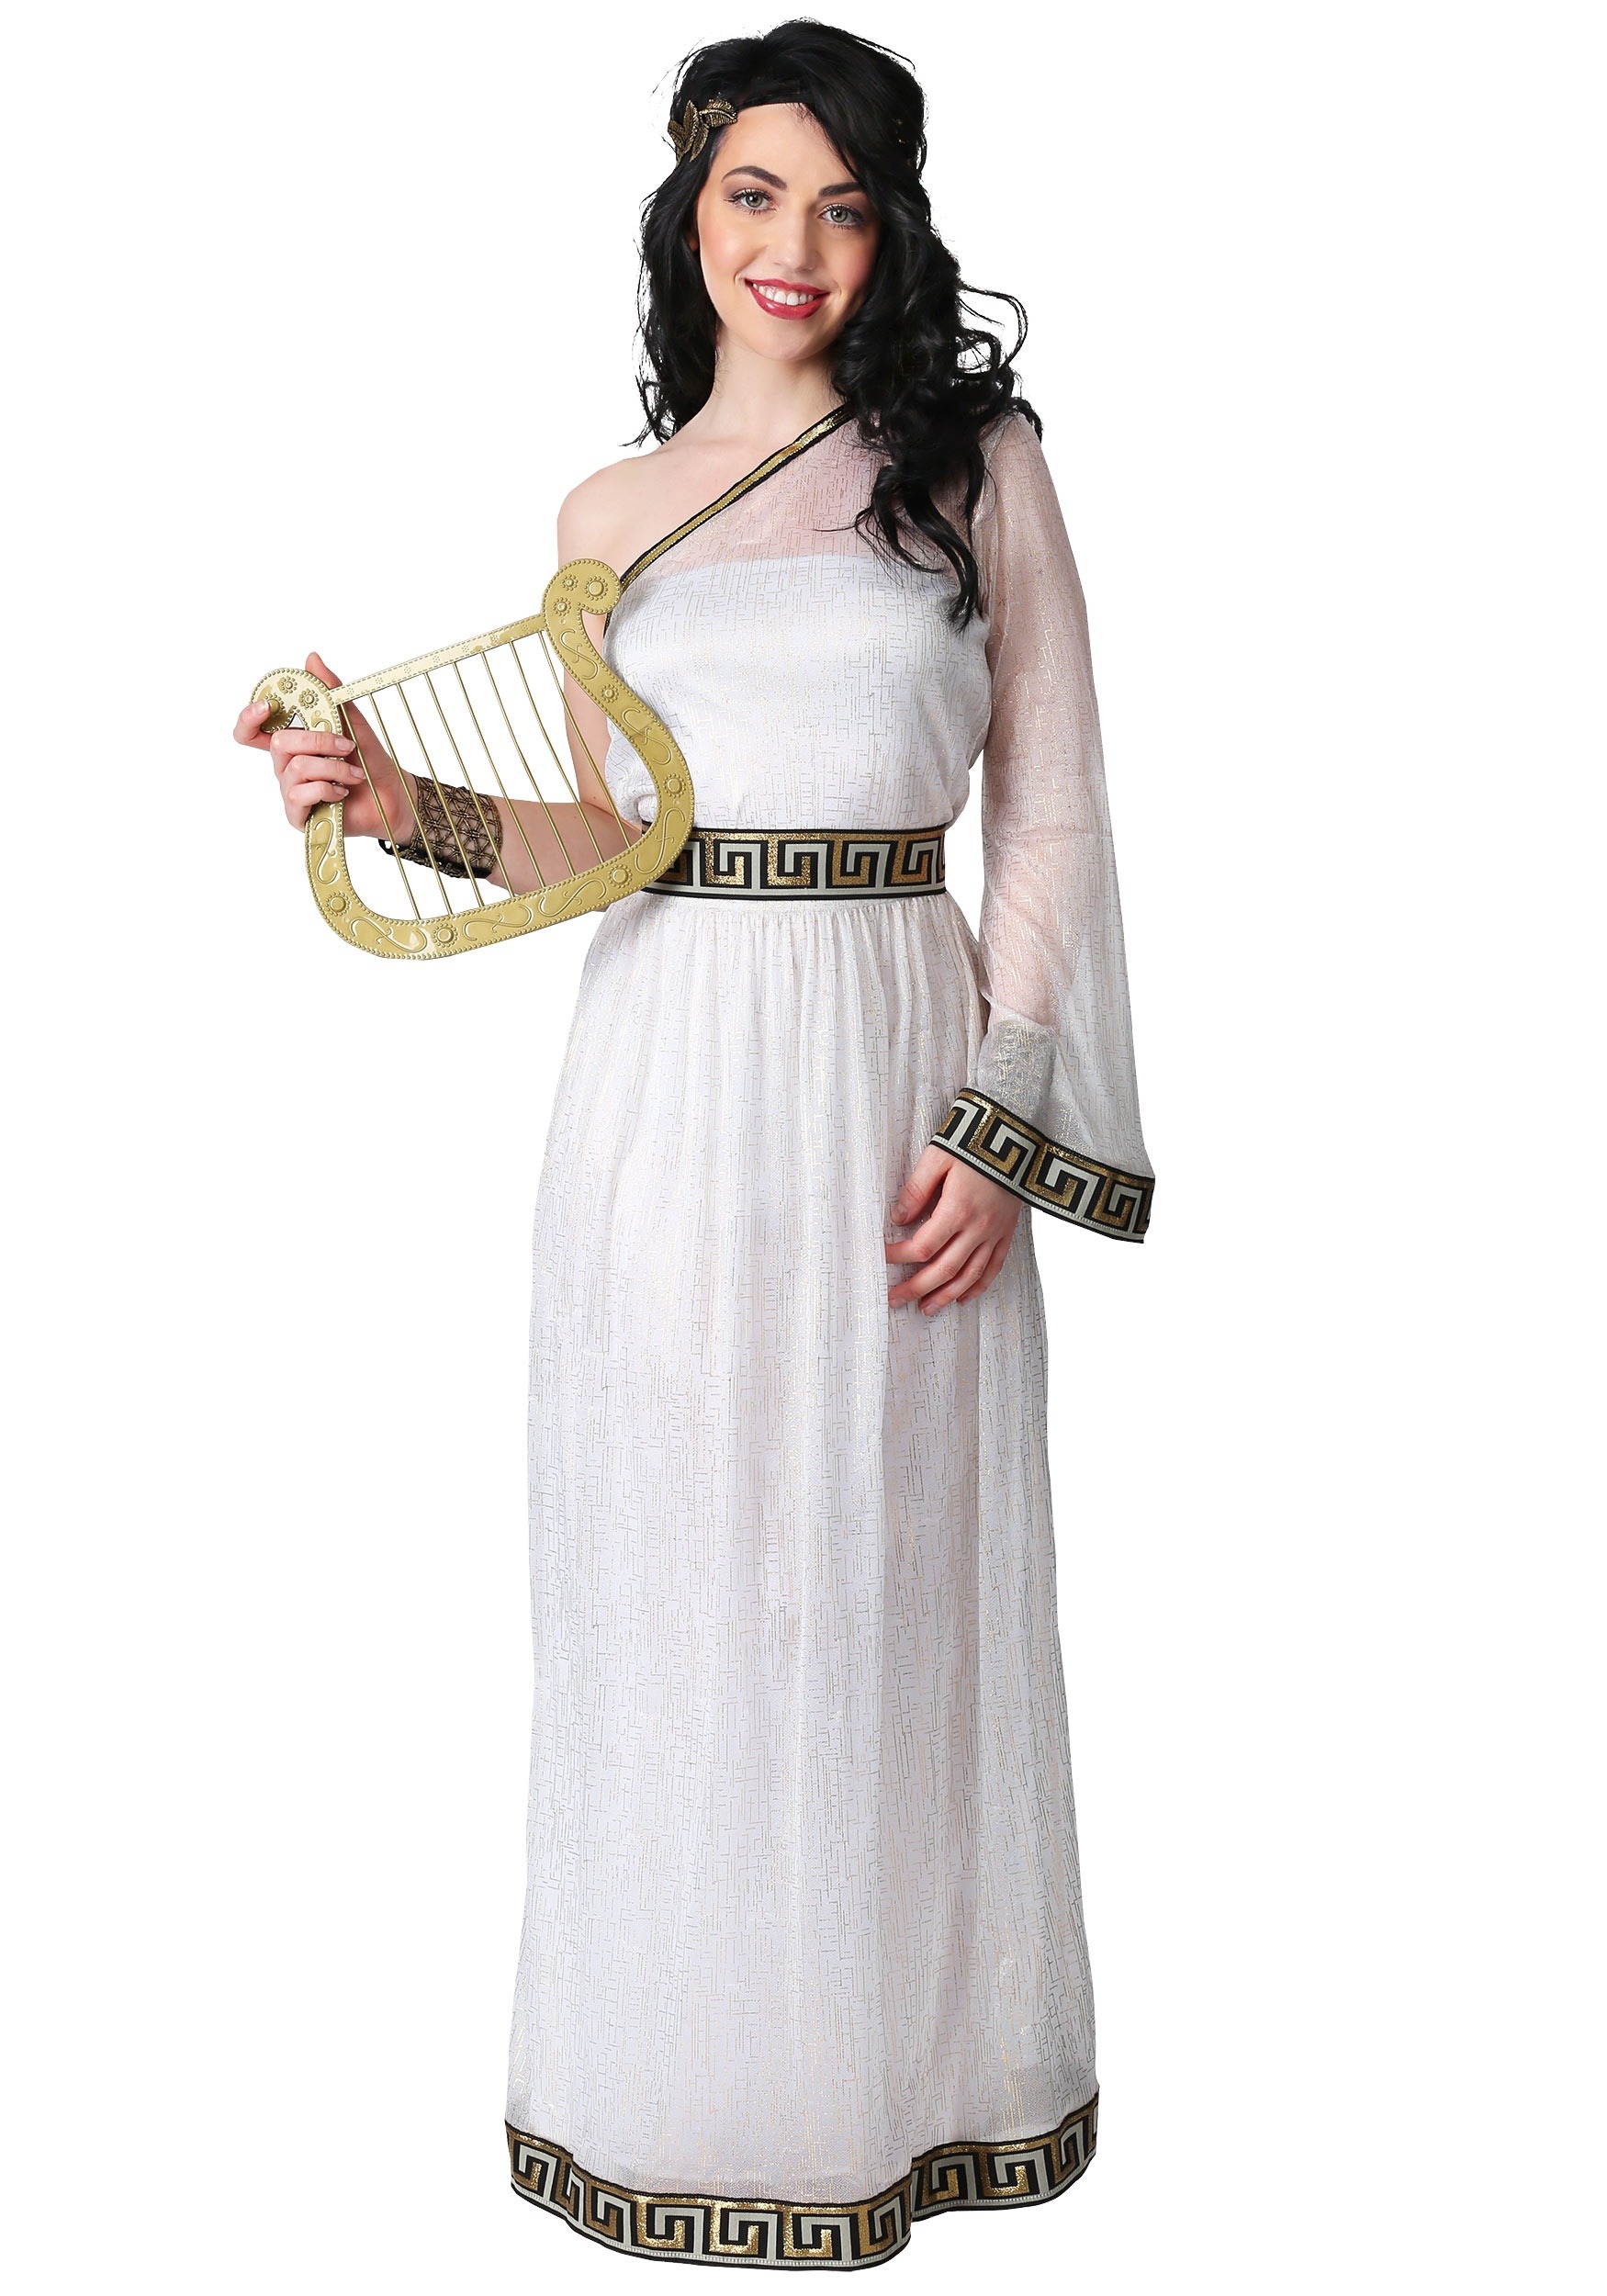 Plus Size Womens Grecian Goddess Costume Ebay